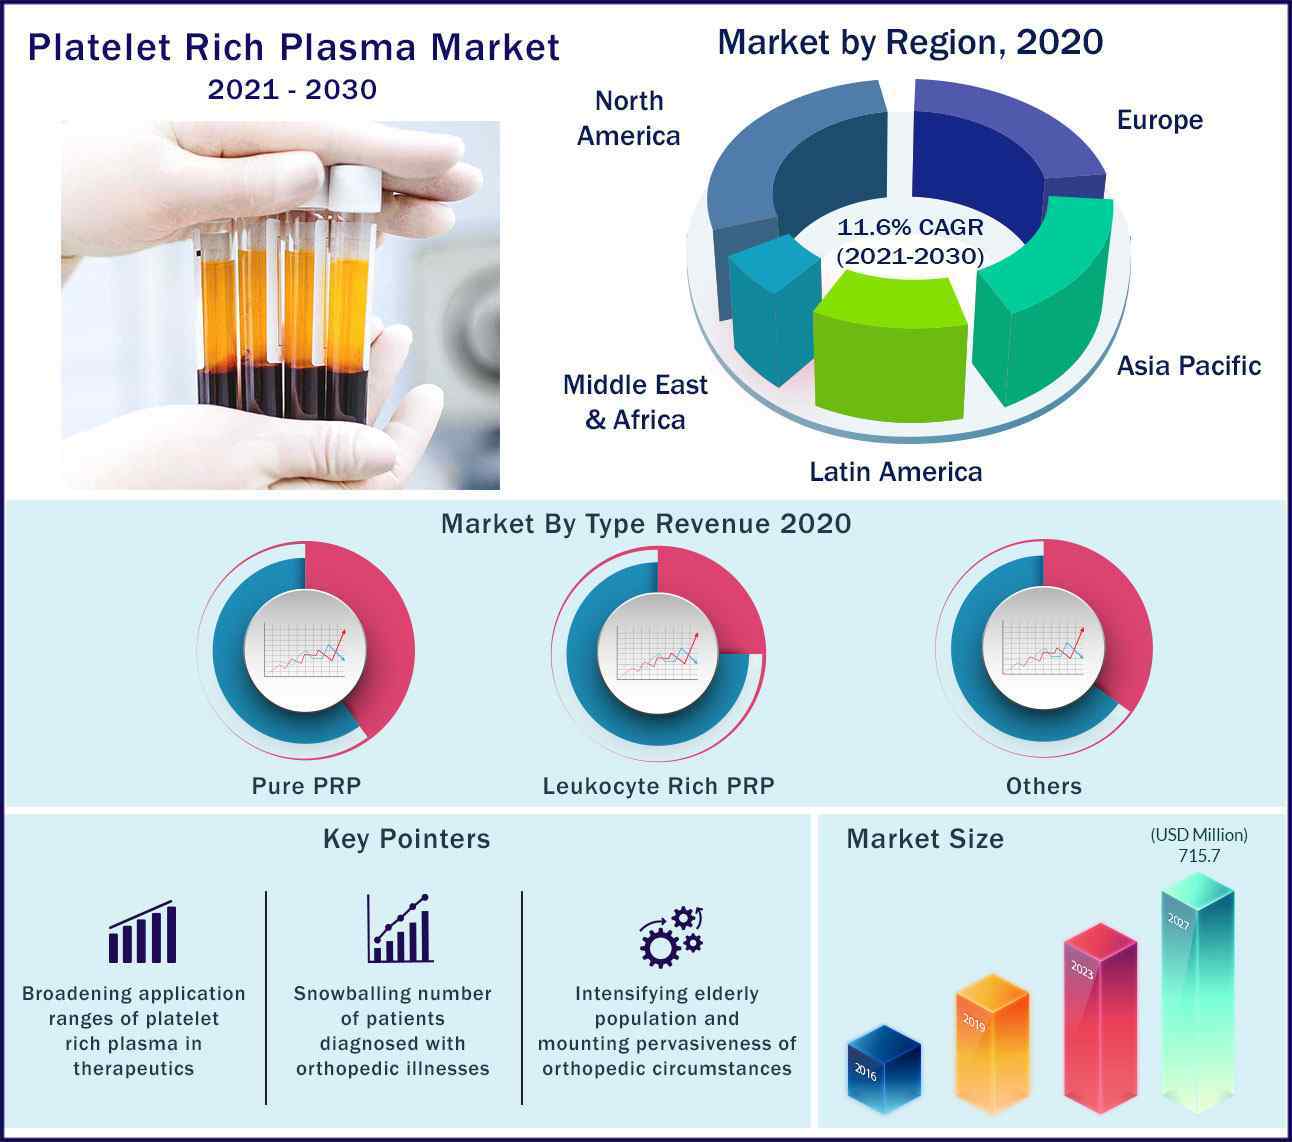 Global Platelet Rich Plasma Market 2021-2030